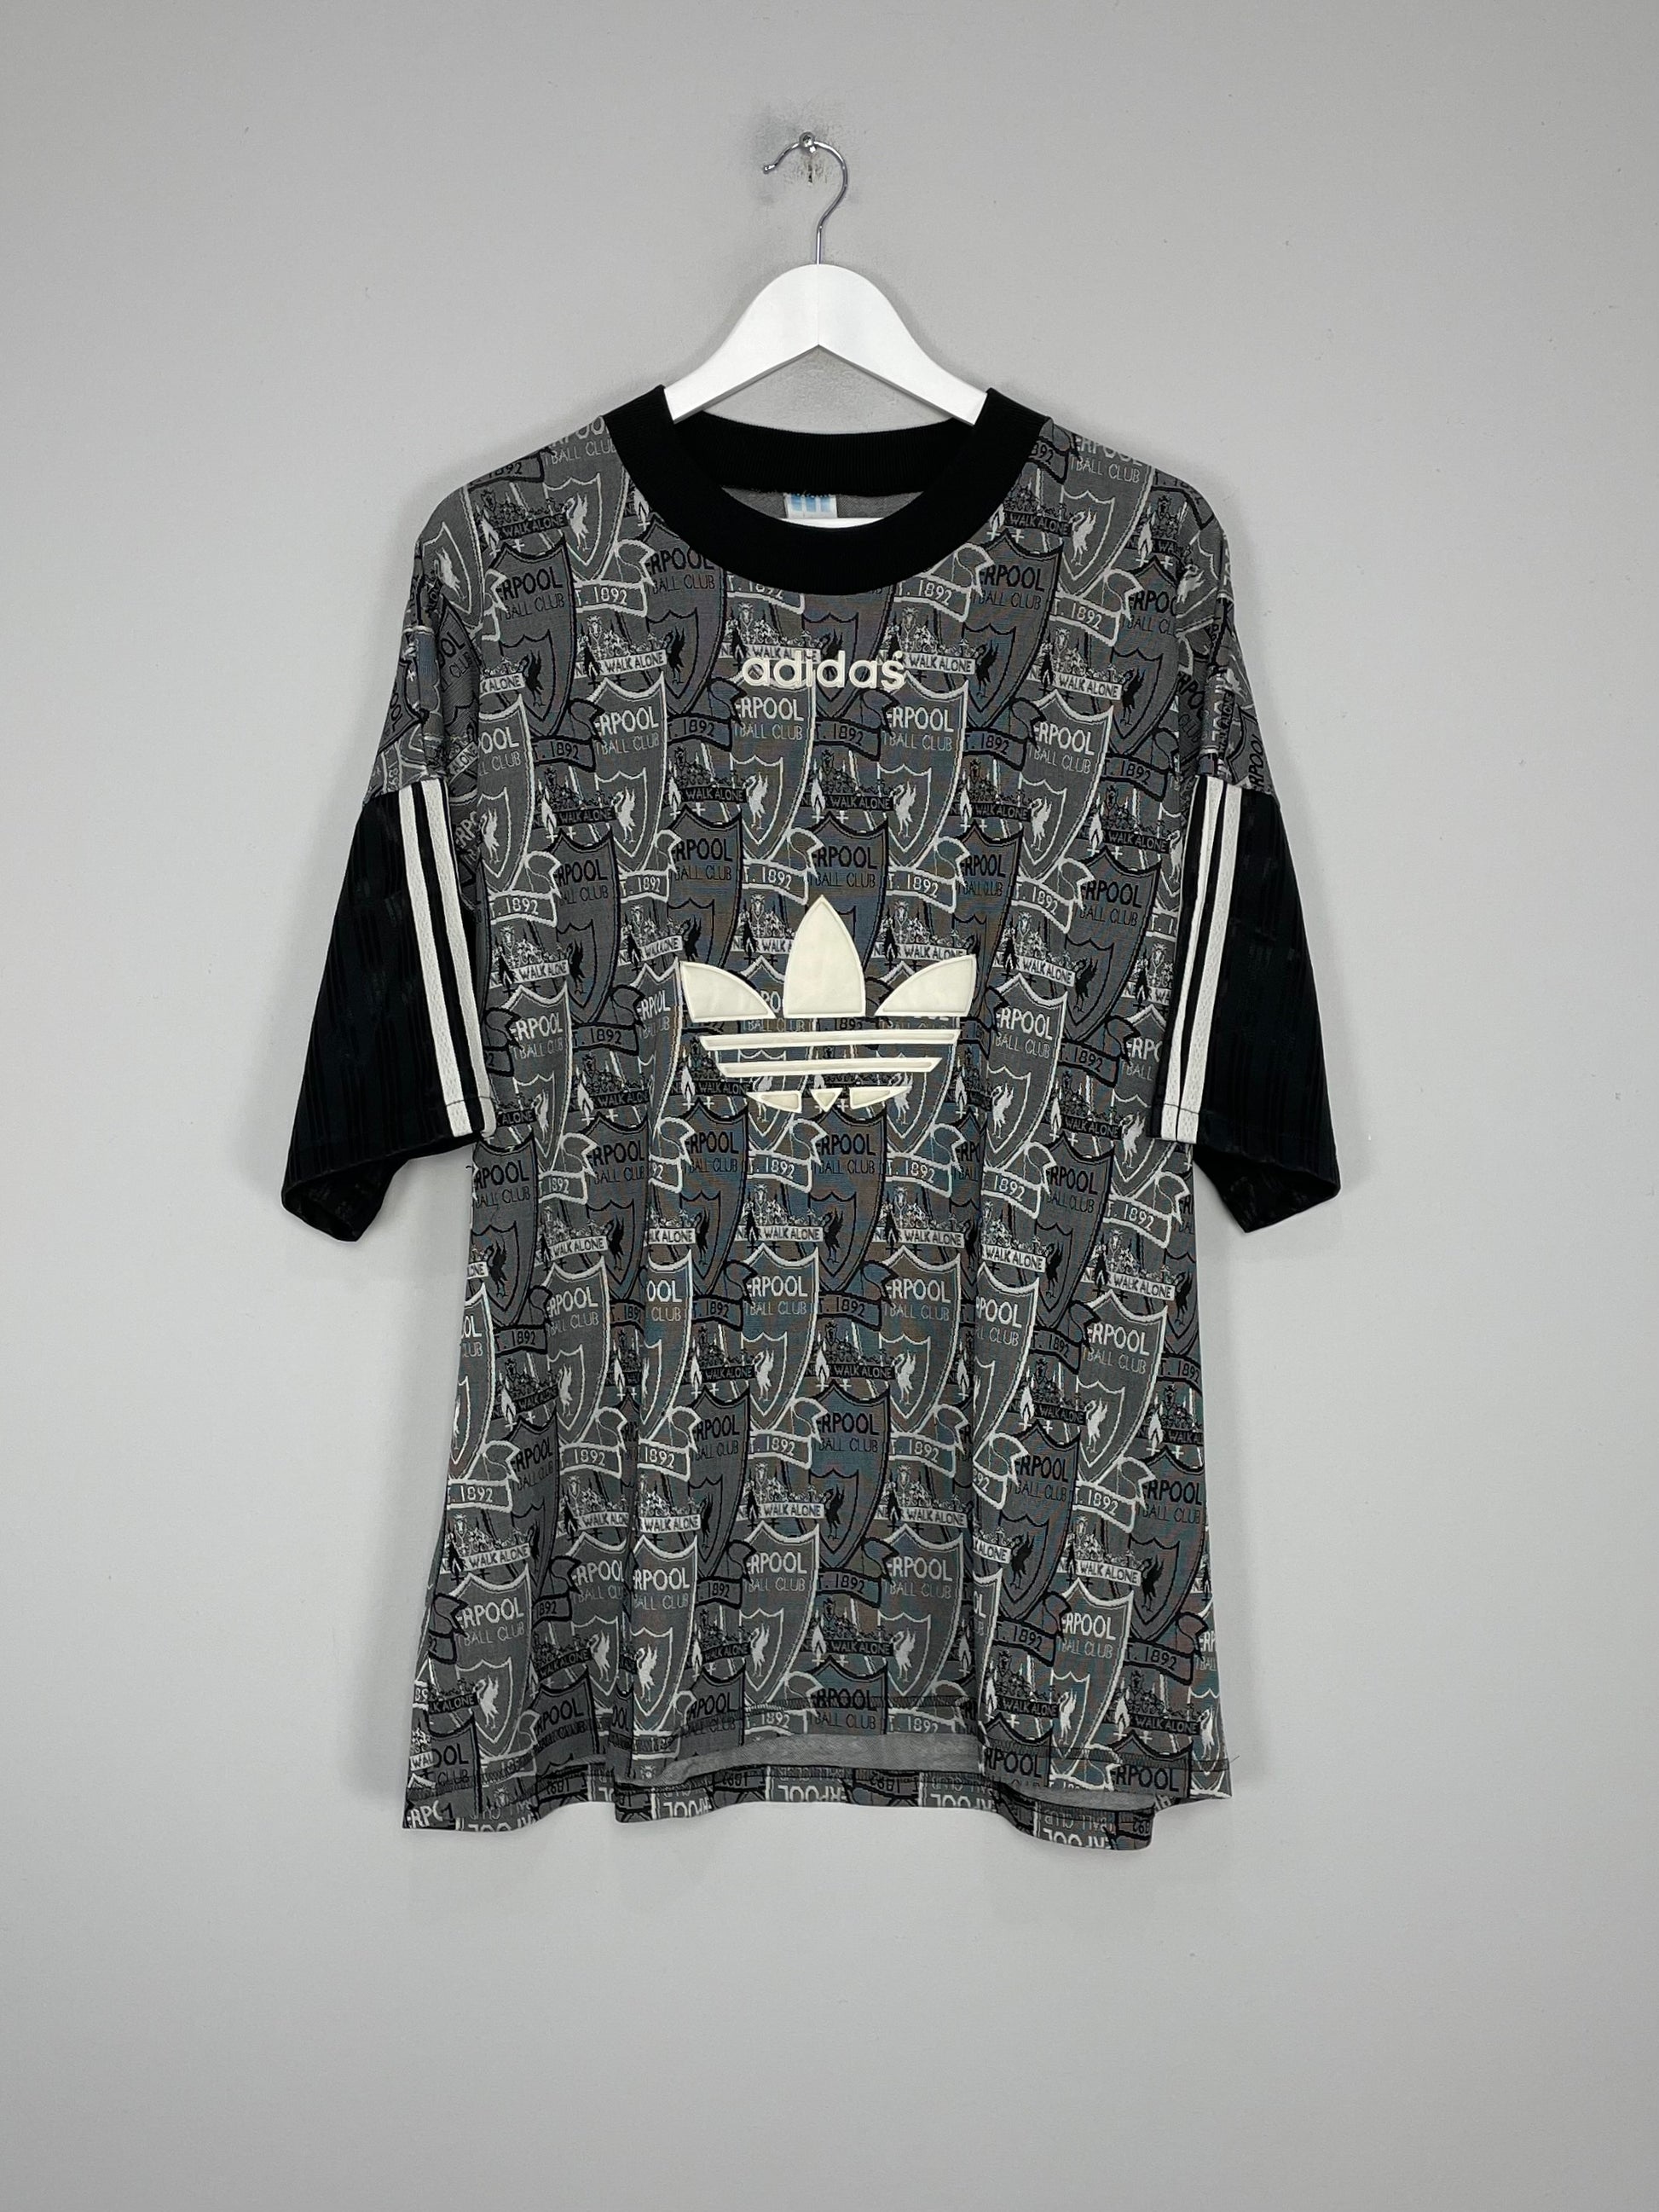 Liverpool 1993 - 1995 Away football Adidas shirt size 34/36